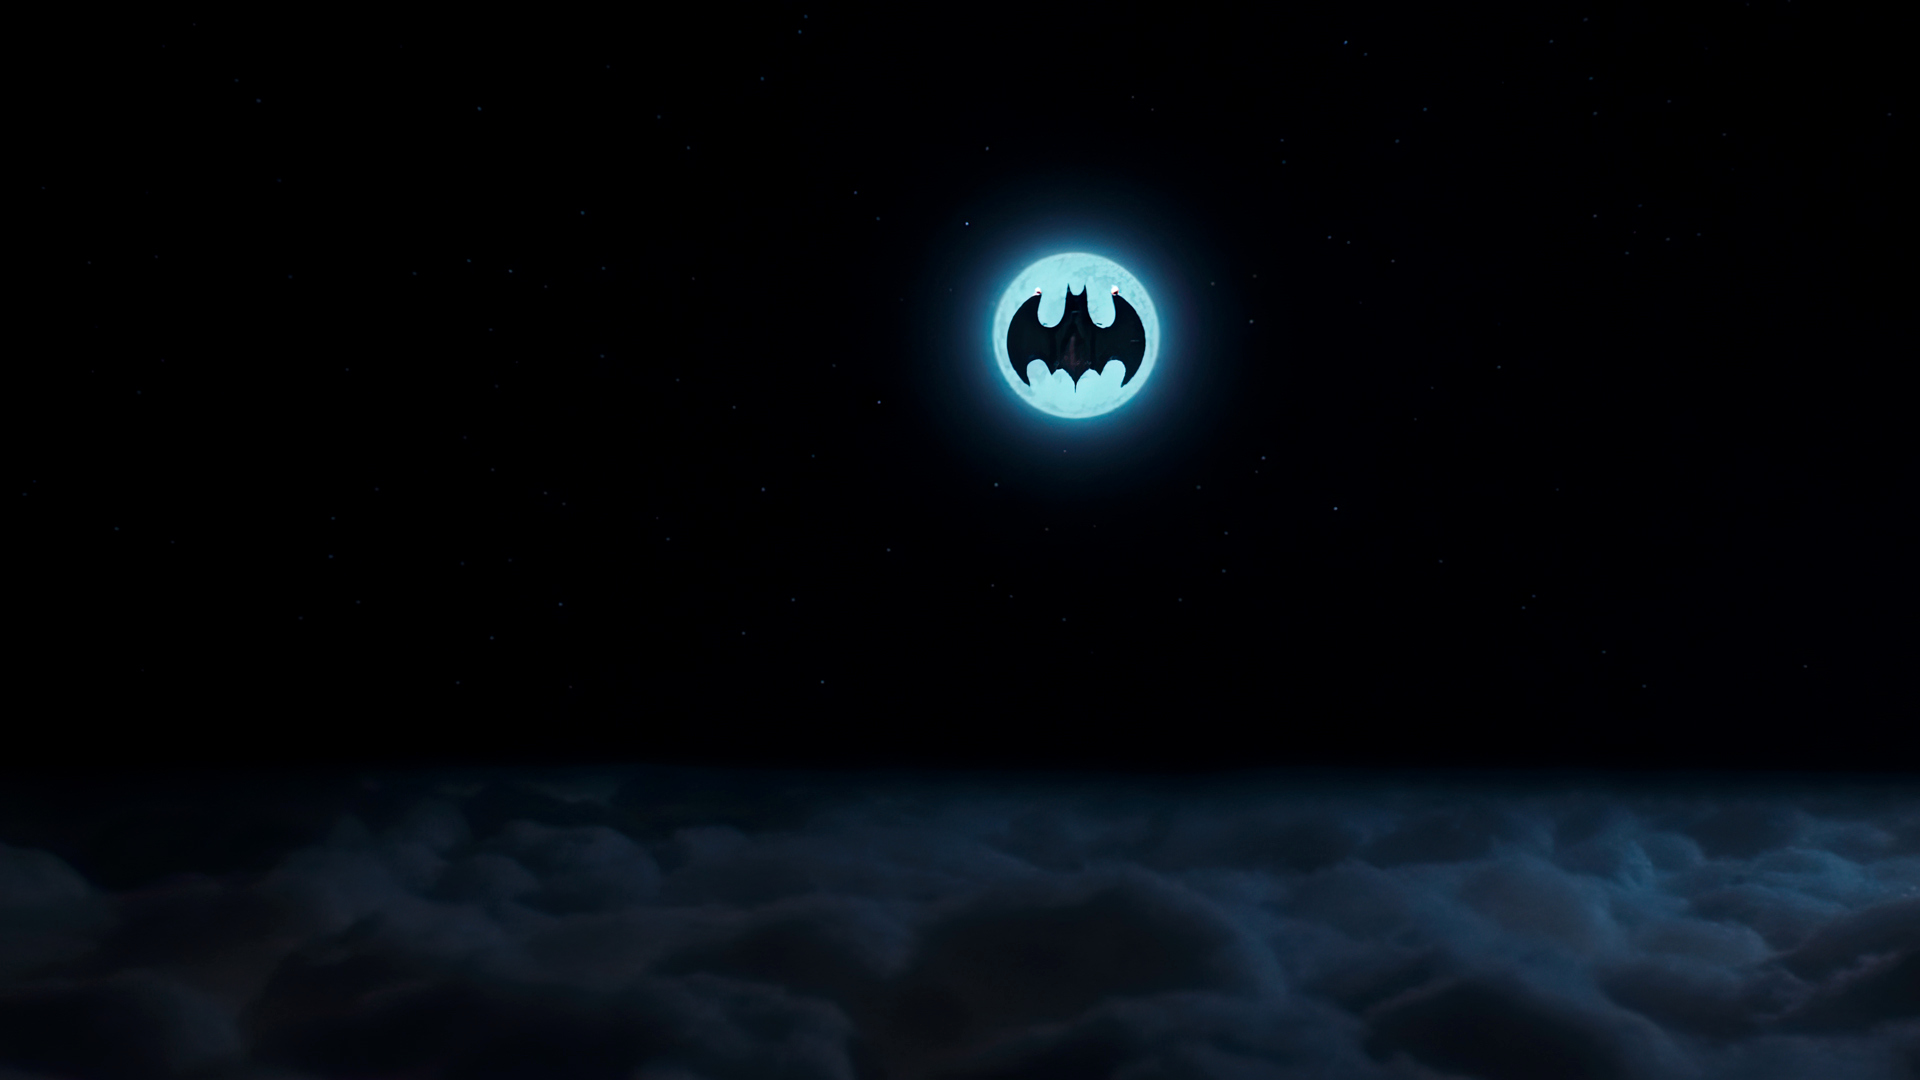 General 1920x1080 Batman (1989) movies film stills Moon Batwing (aircraft) clouds sky night simple background dark background minimalism